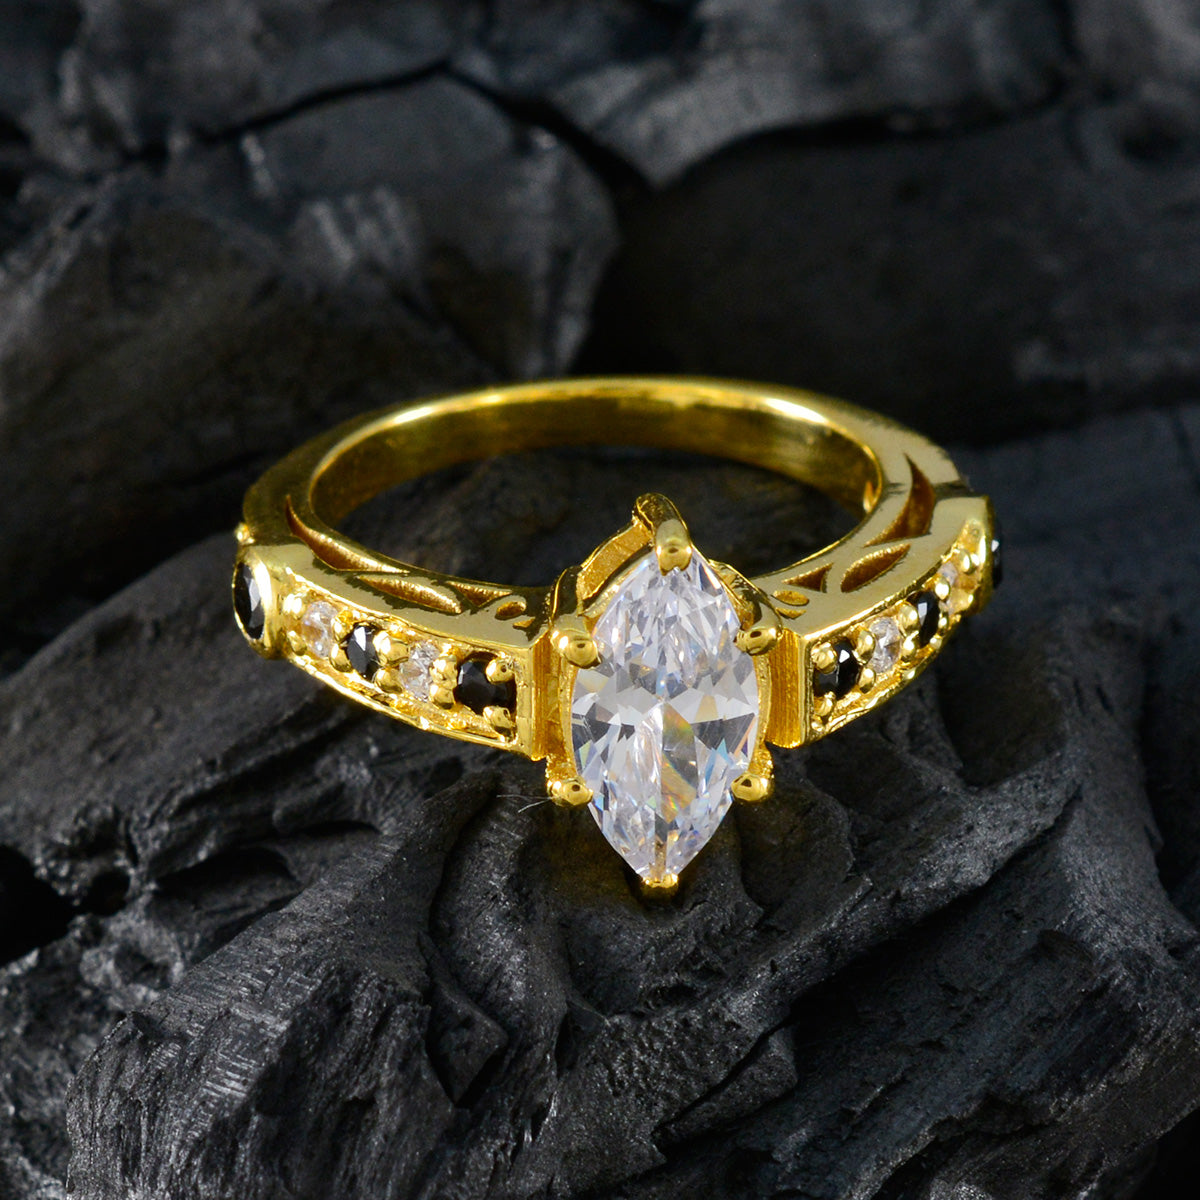 Riyo Supplies Silver Ring With Yellow Gold Plating Blue Sapphire Stone Marquise Shape Prong Setting Handamde Jewelry Graduation Ring